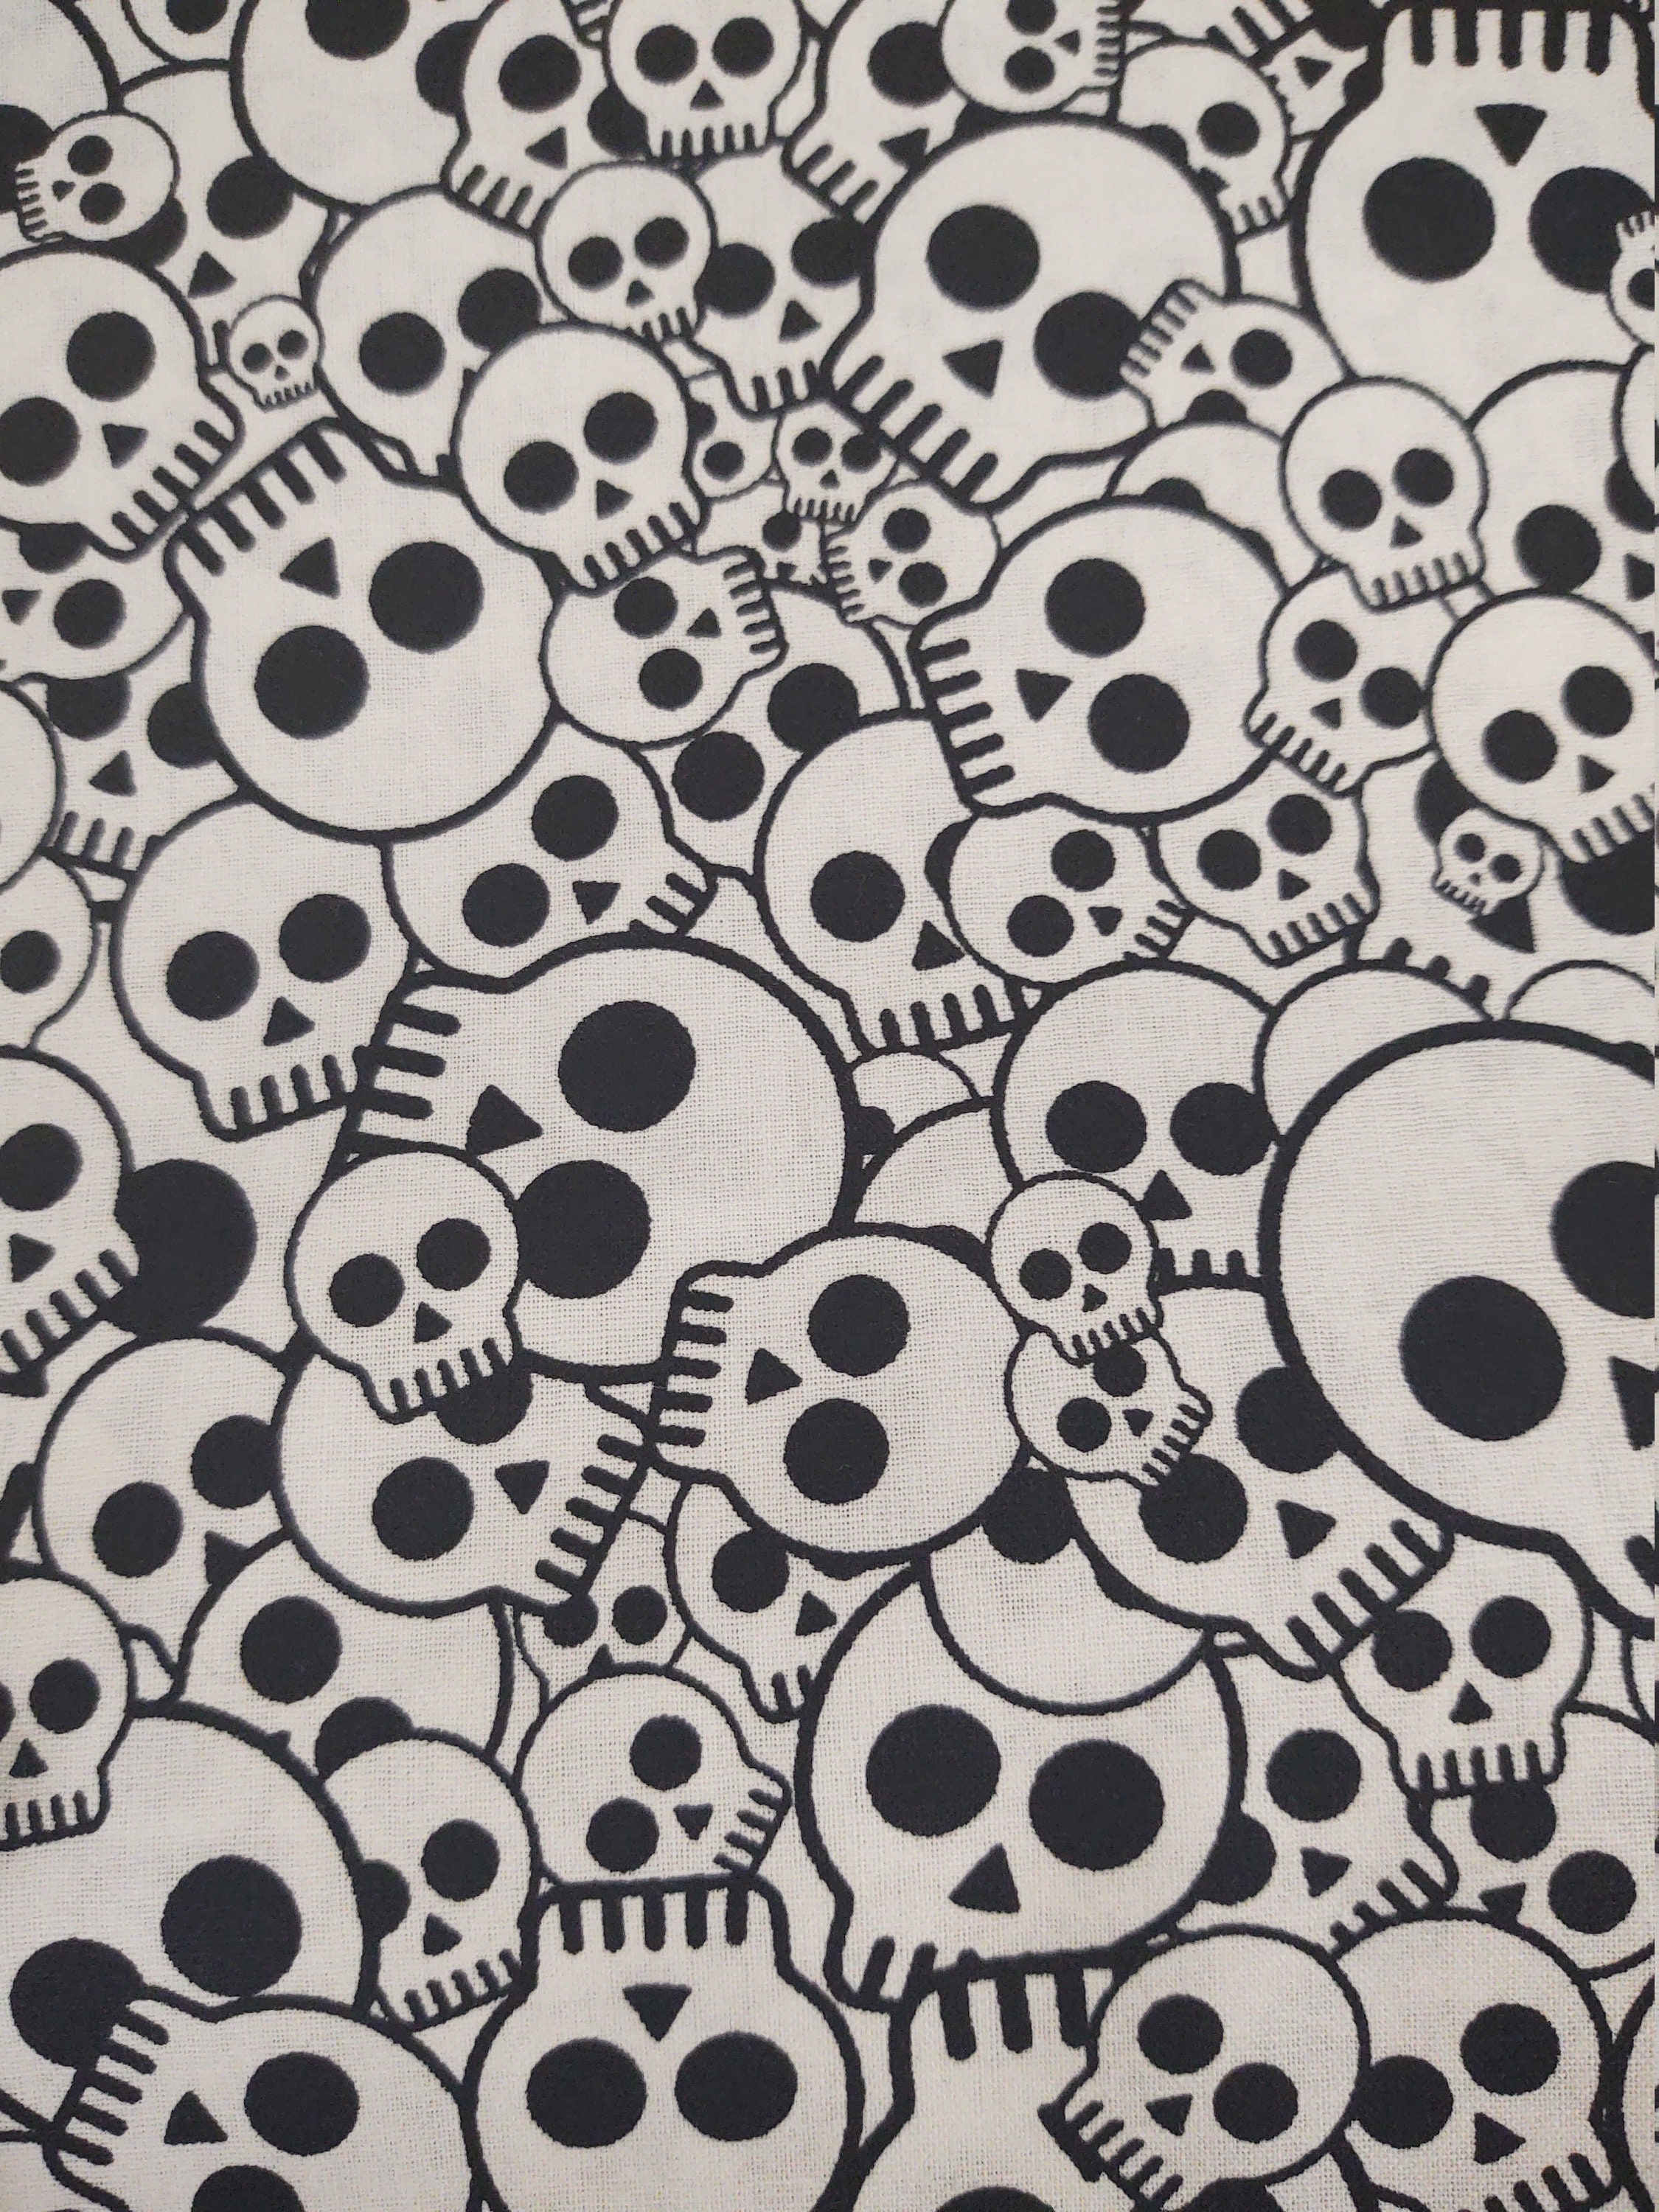 Skull fabric Skull & Bones Sugar Skulls 100% cotton fabric | Etsy